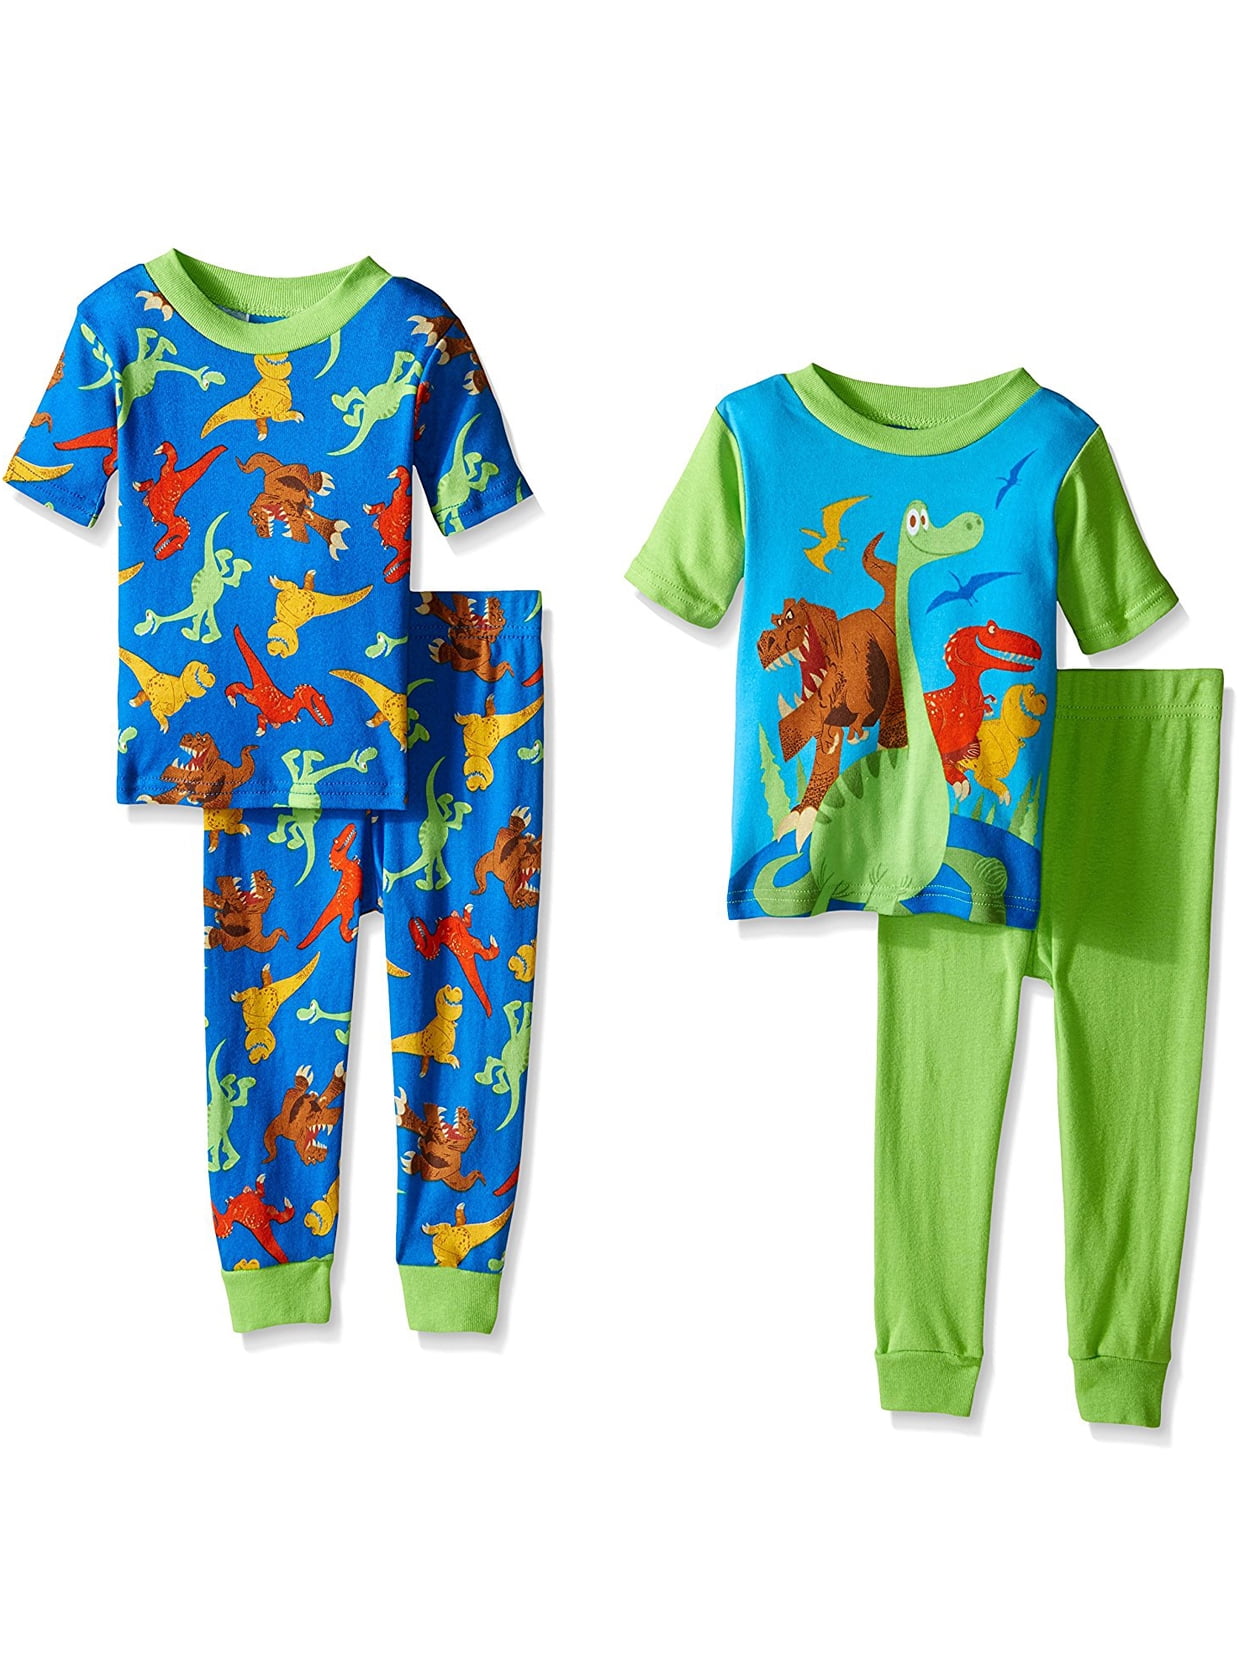 The Good Dinosaur Toddler 4 piece Cotton Pajamas Set 21GD008ESL -  Walmart.com